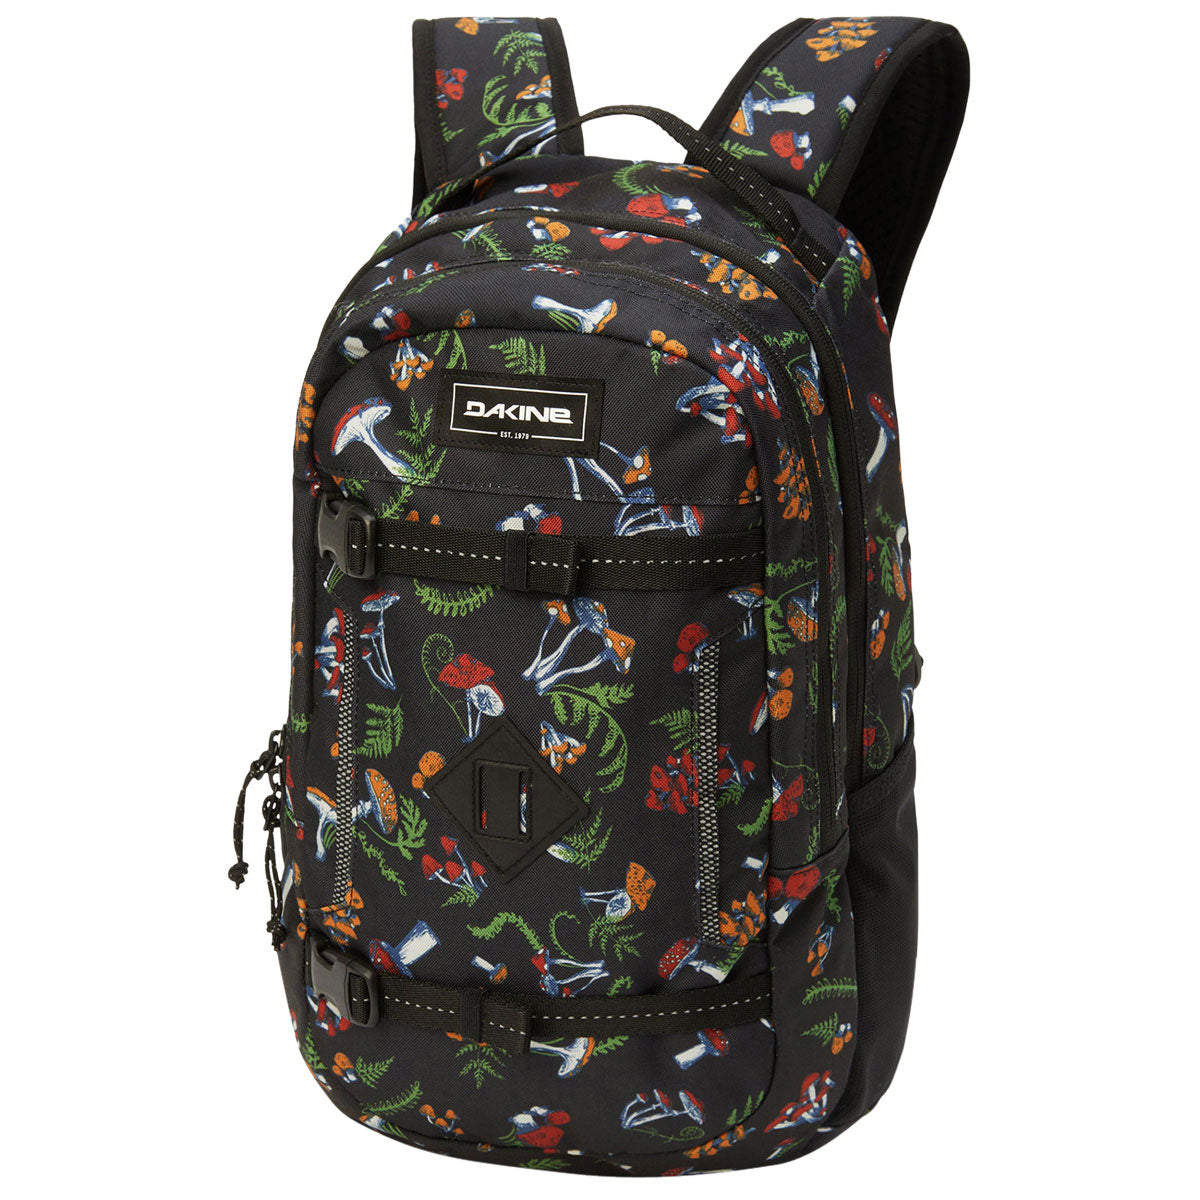 Dakine Mission Pack 18L Backpack - Mushroom Wonderland image 1